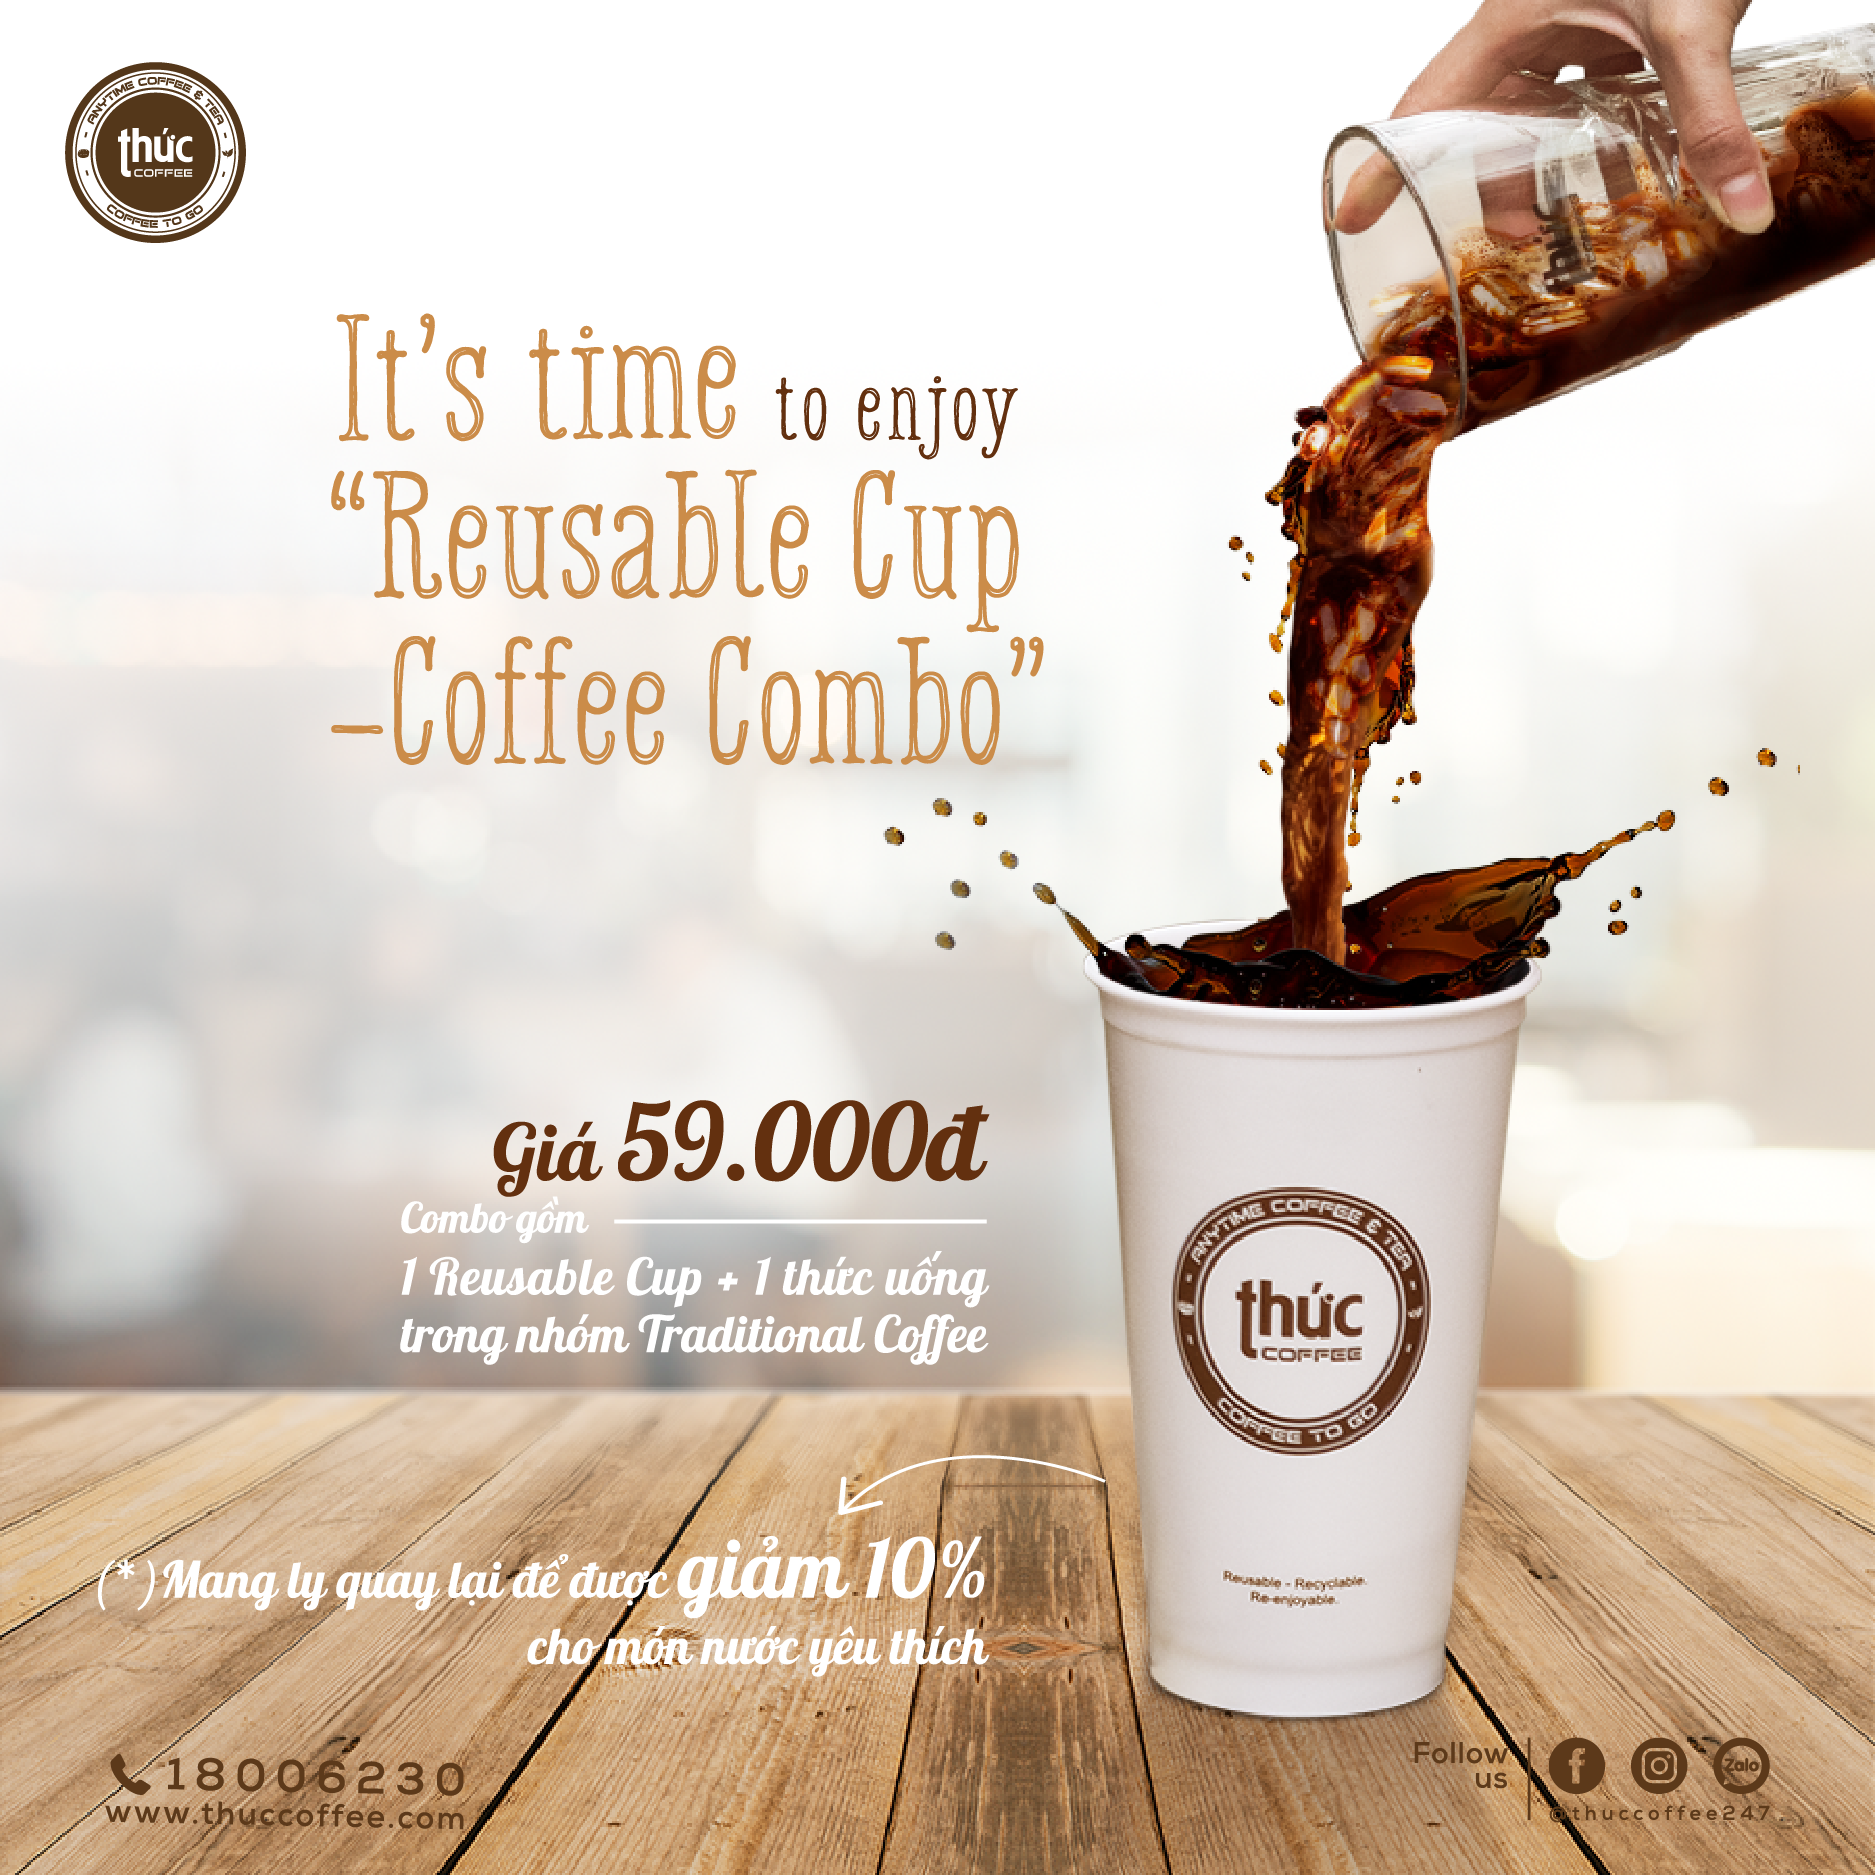 HELLO “REUSABLE CUP - COFFEE COMBO”